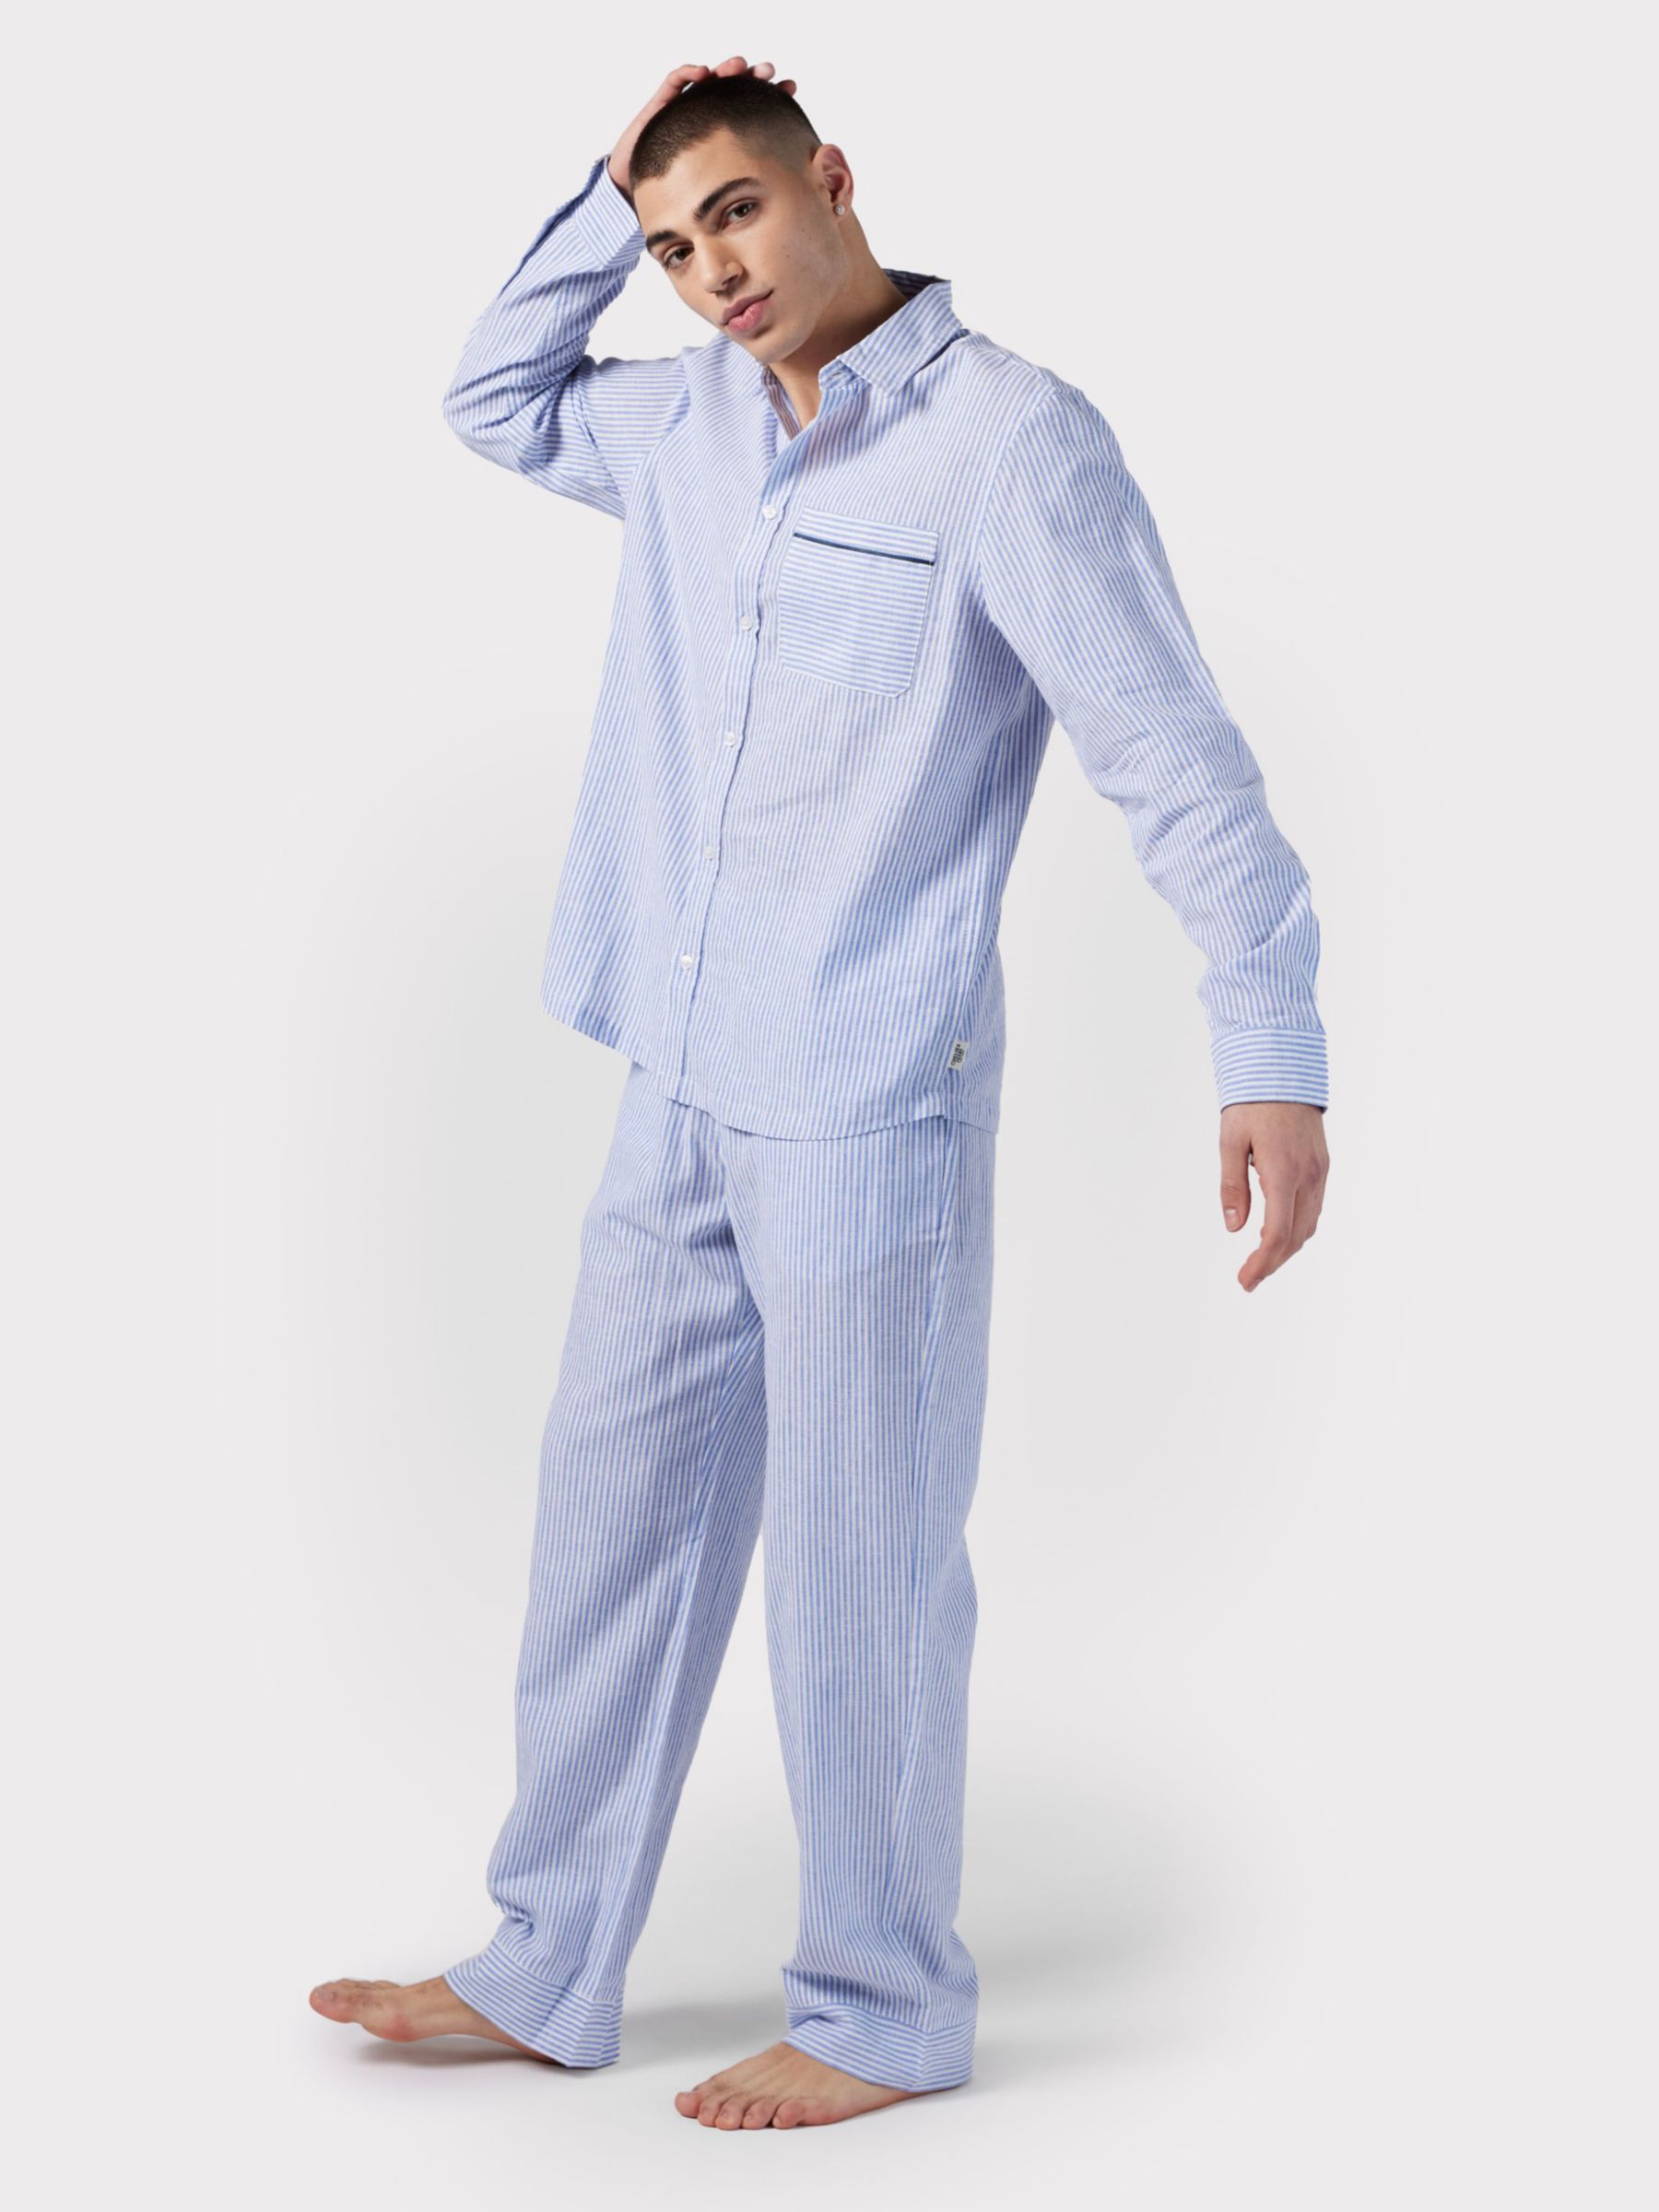 Buy Chelsea Peers Linen Blend Poplin Stripe Pyjama Bottoms, Navy/White Online at johnlewis.com